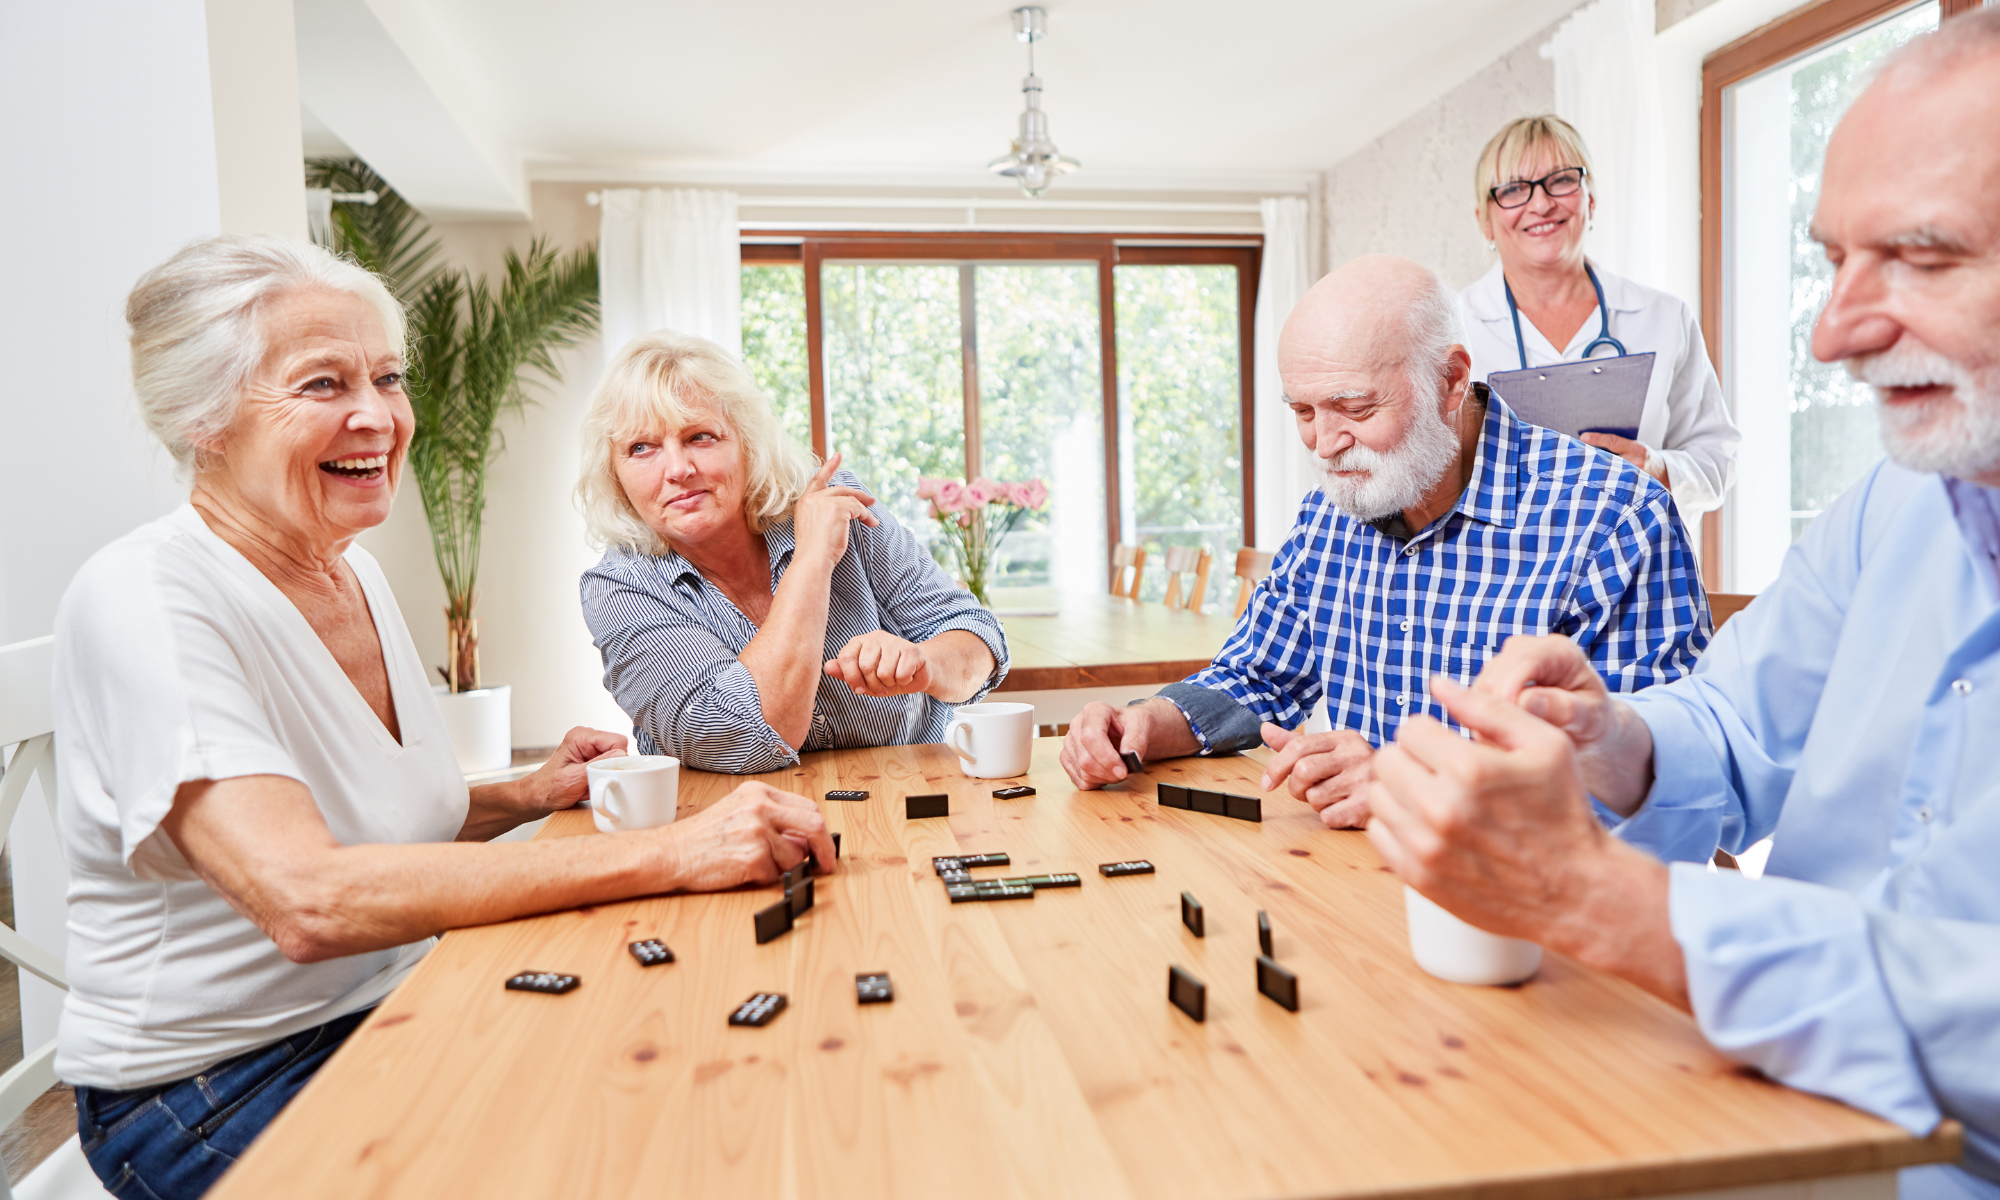 Group of seniors enjoying playing dominoes while a nurse looks on smiling